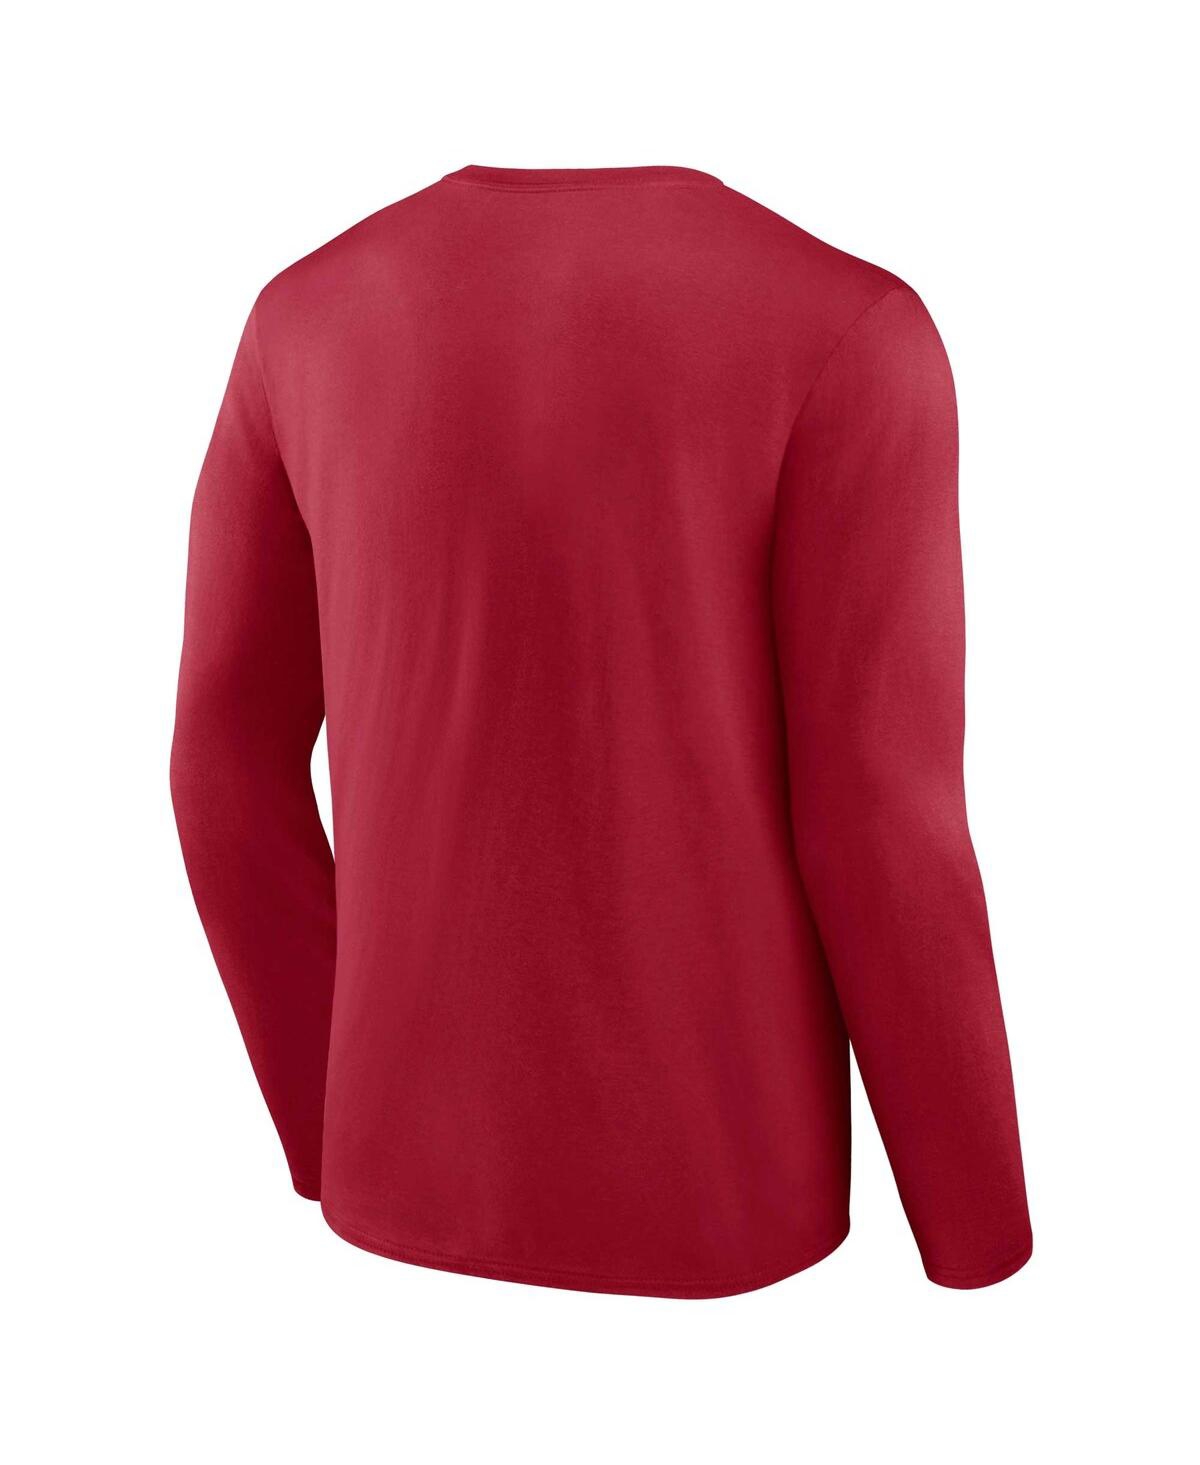 Shop Fanatics Men's  Crimson Oklahoma Sooners Distressed Arch Over Logo Long Sleeve T-shirt